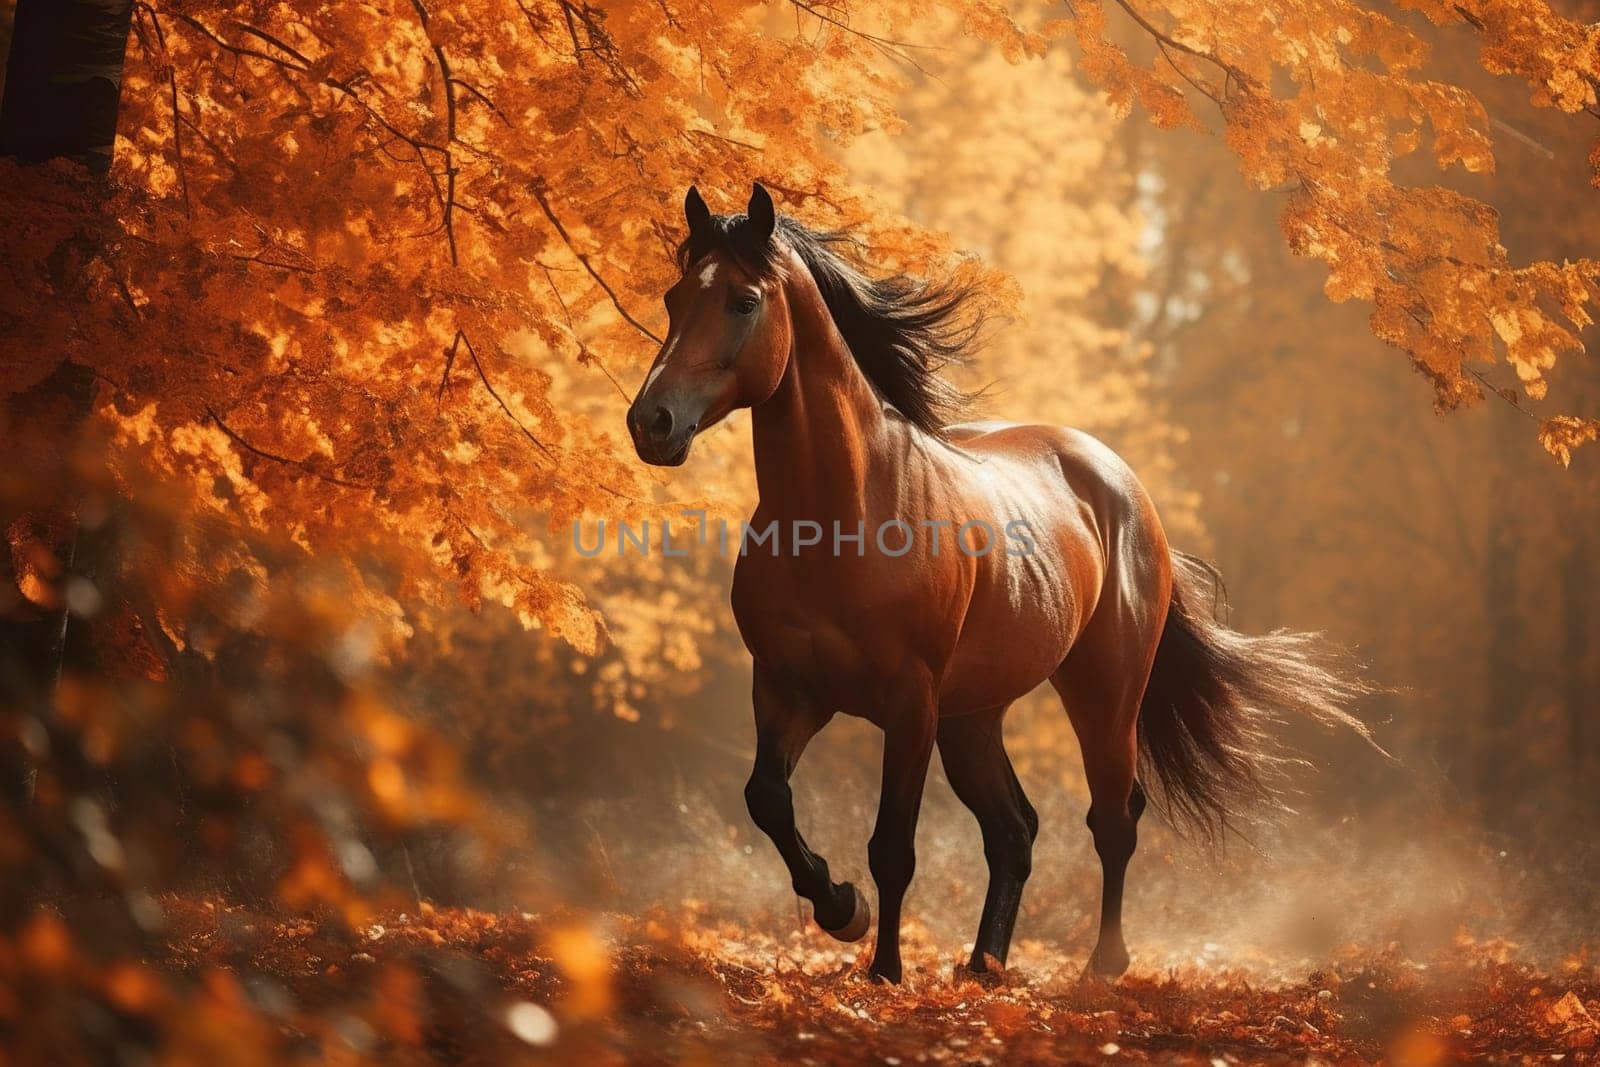 Horse Running Fast Through An Autumnal Forest by tan4ikk1